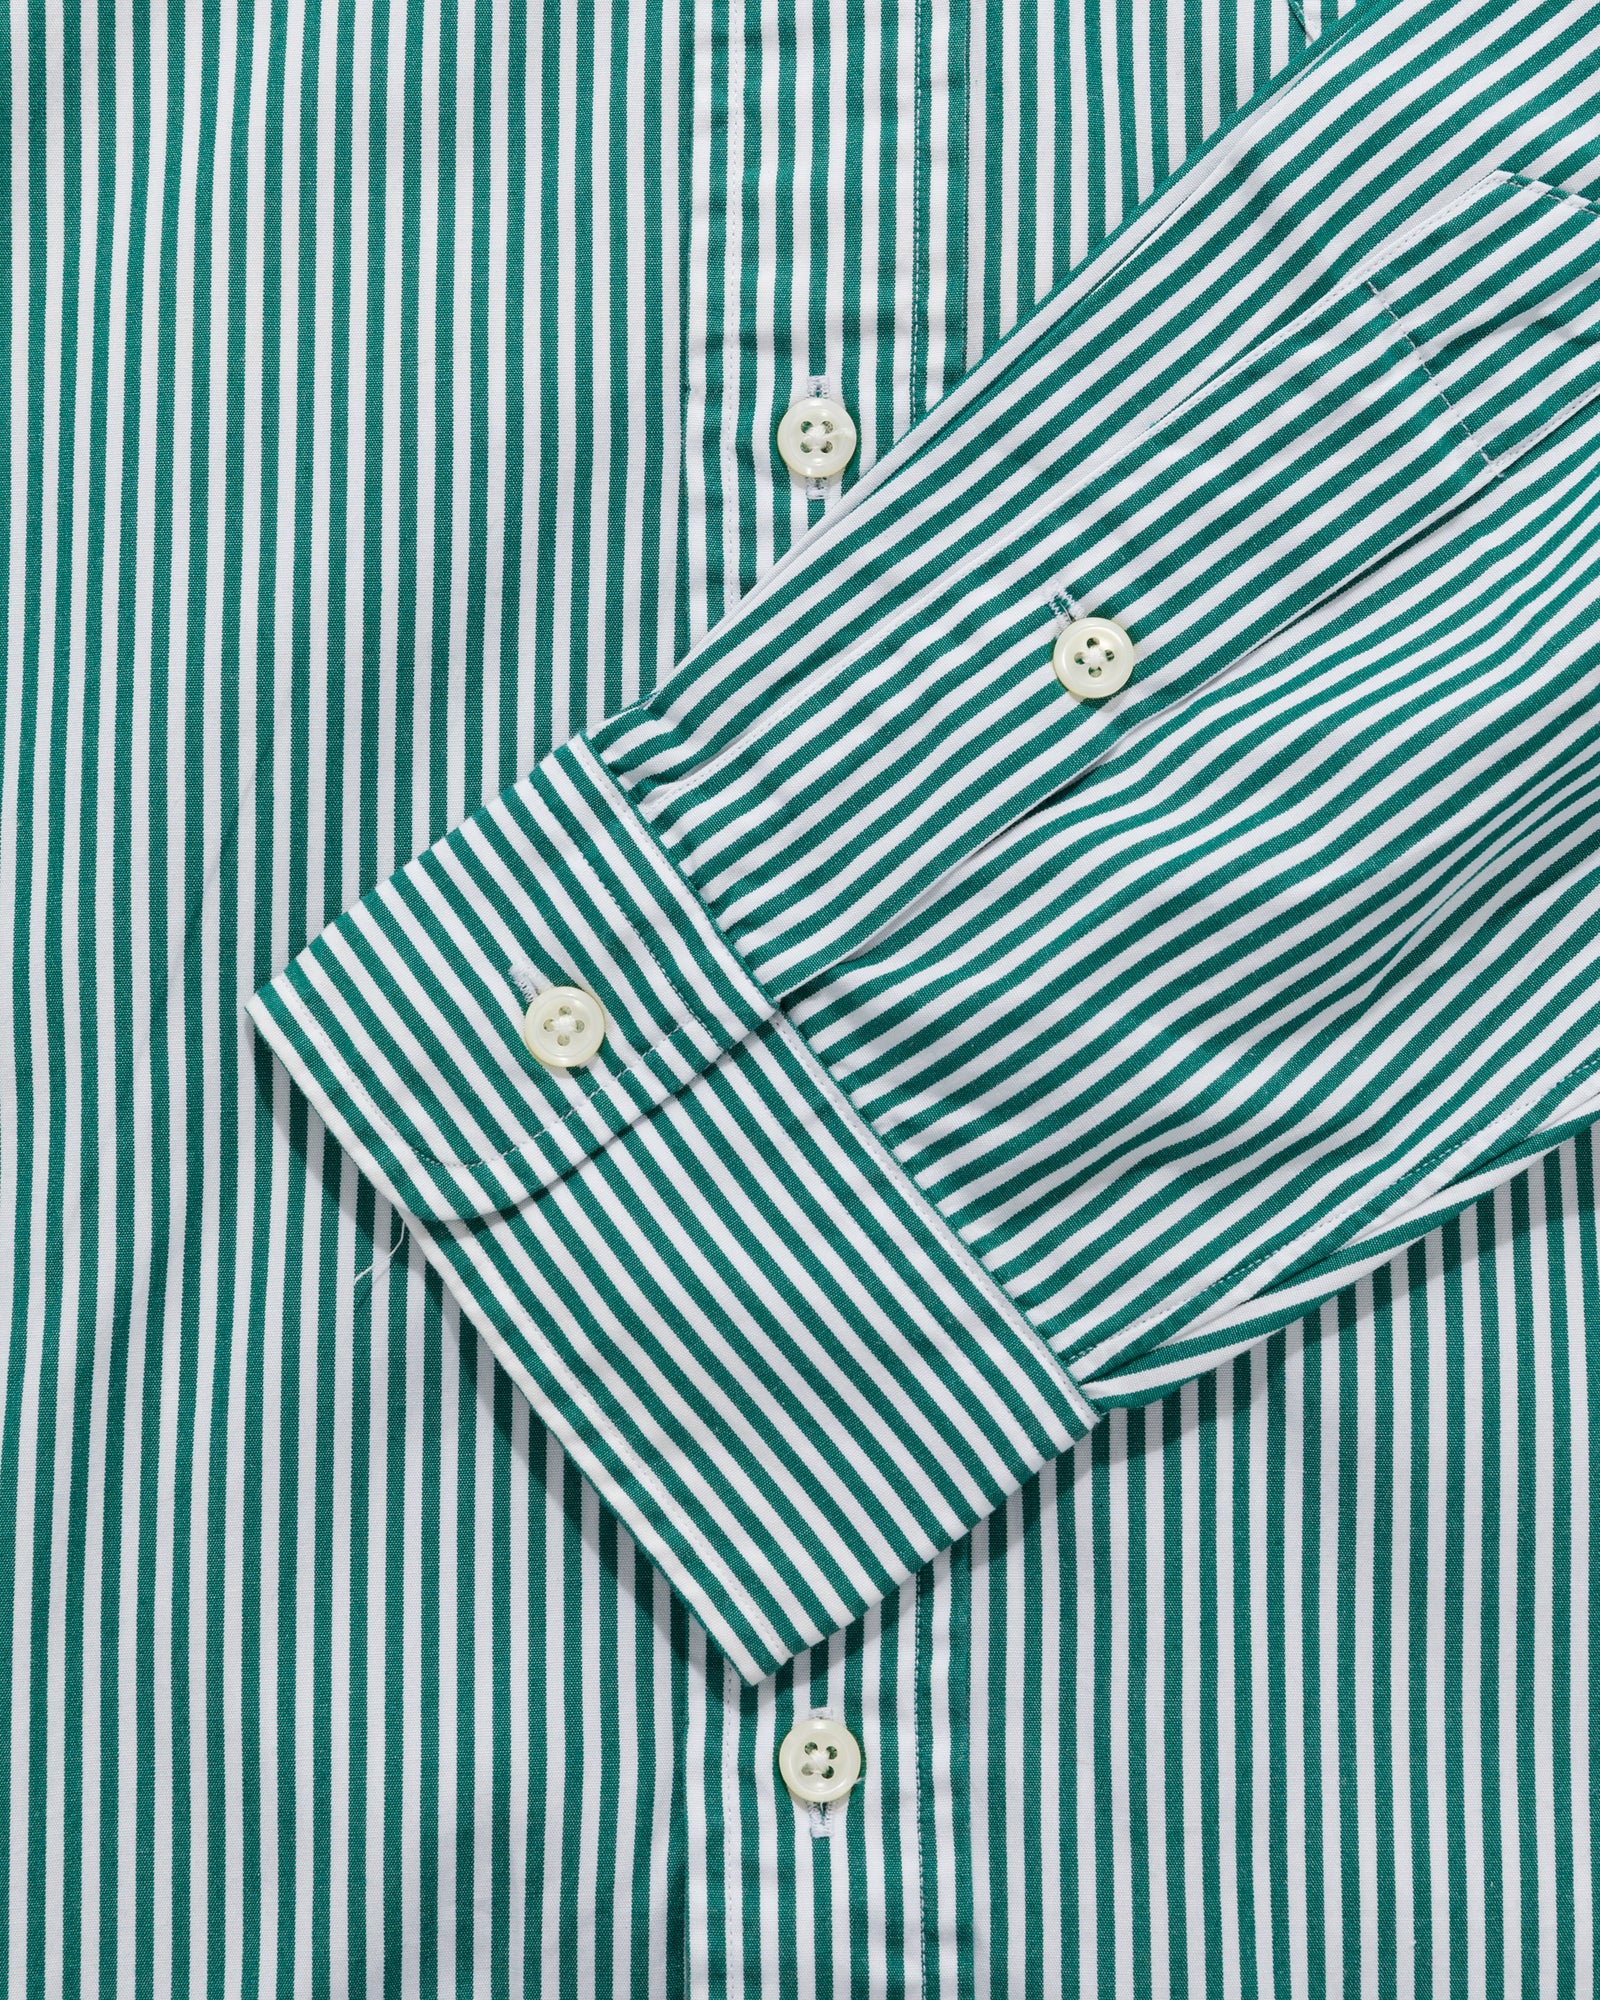 Vintage Polo Contrast Collar Shirt